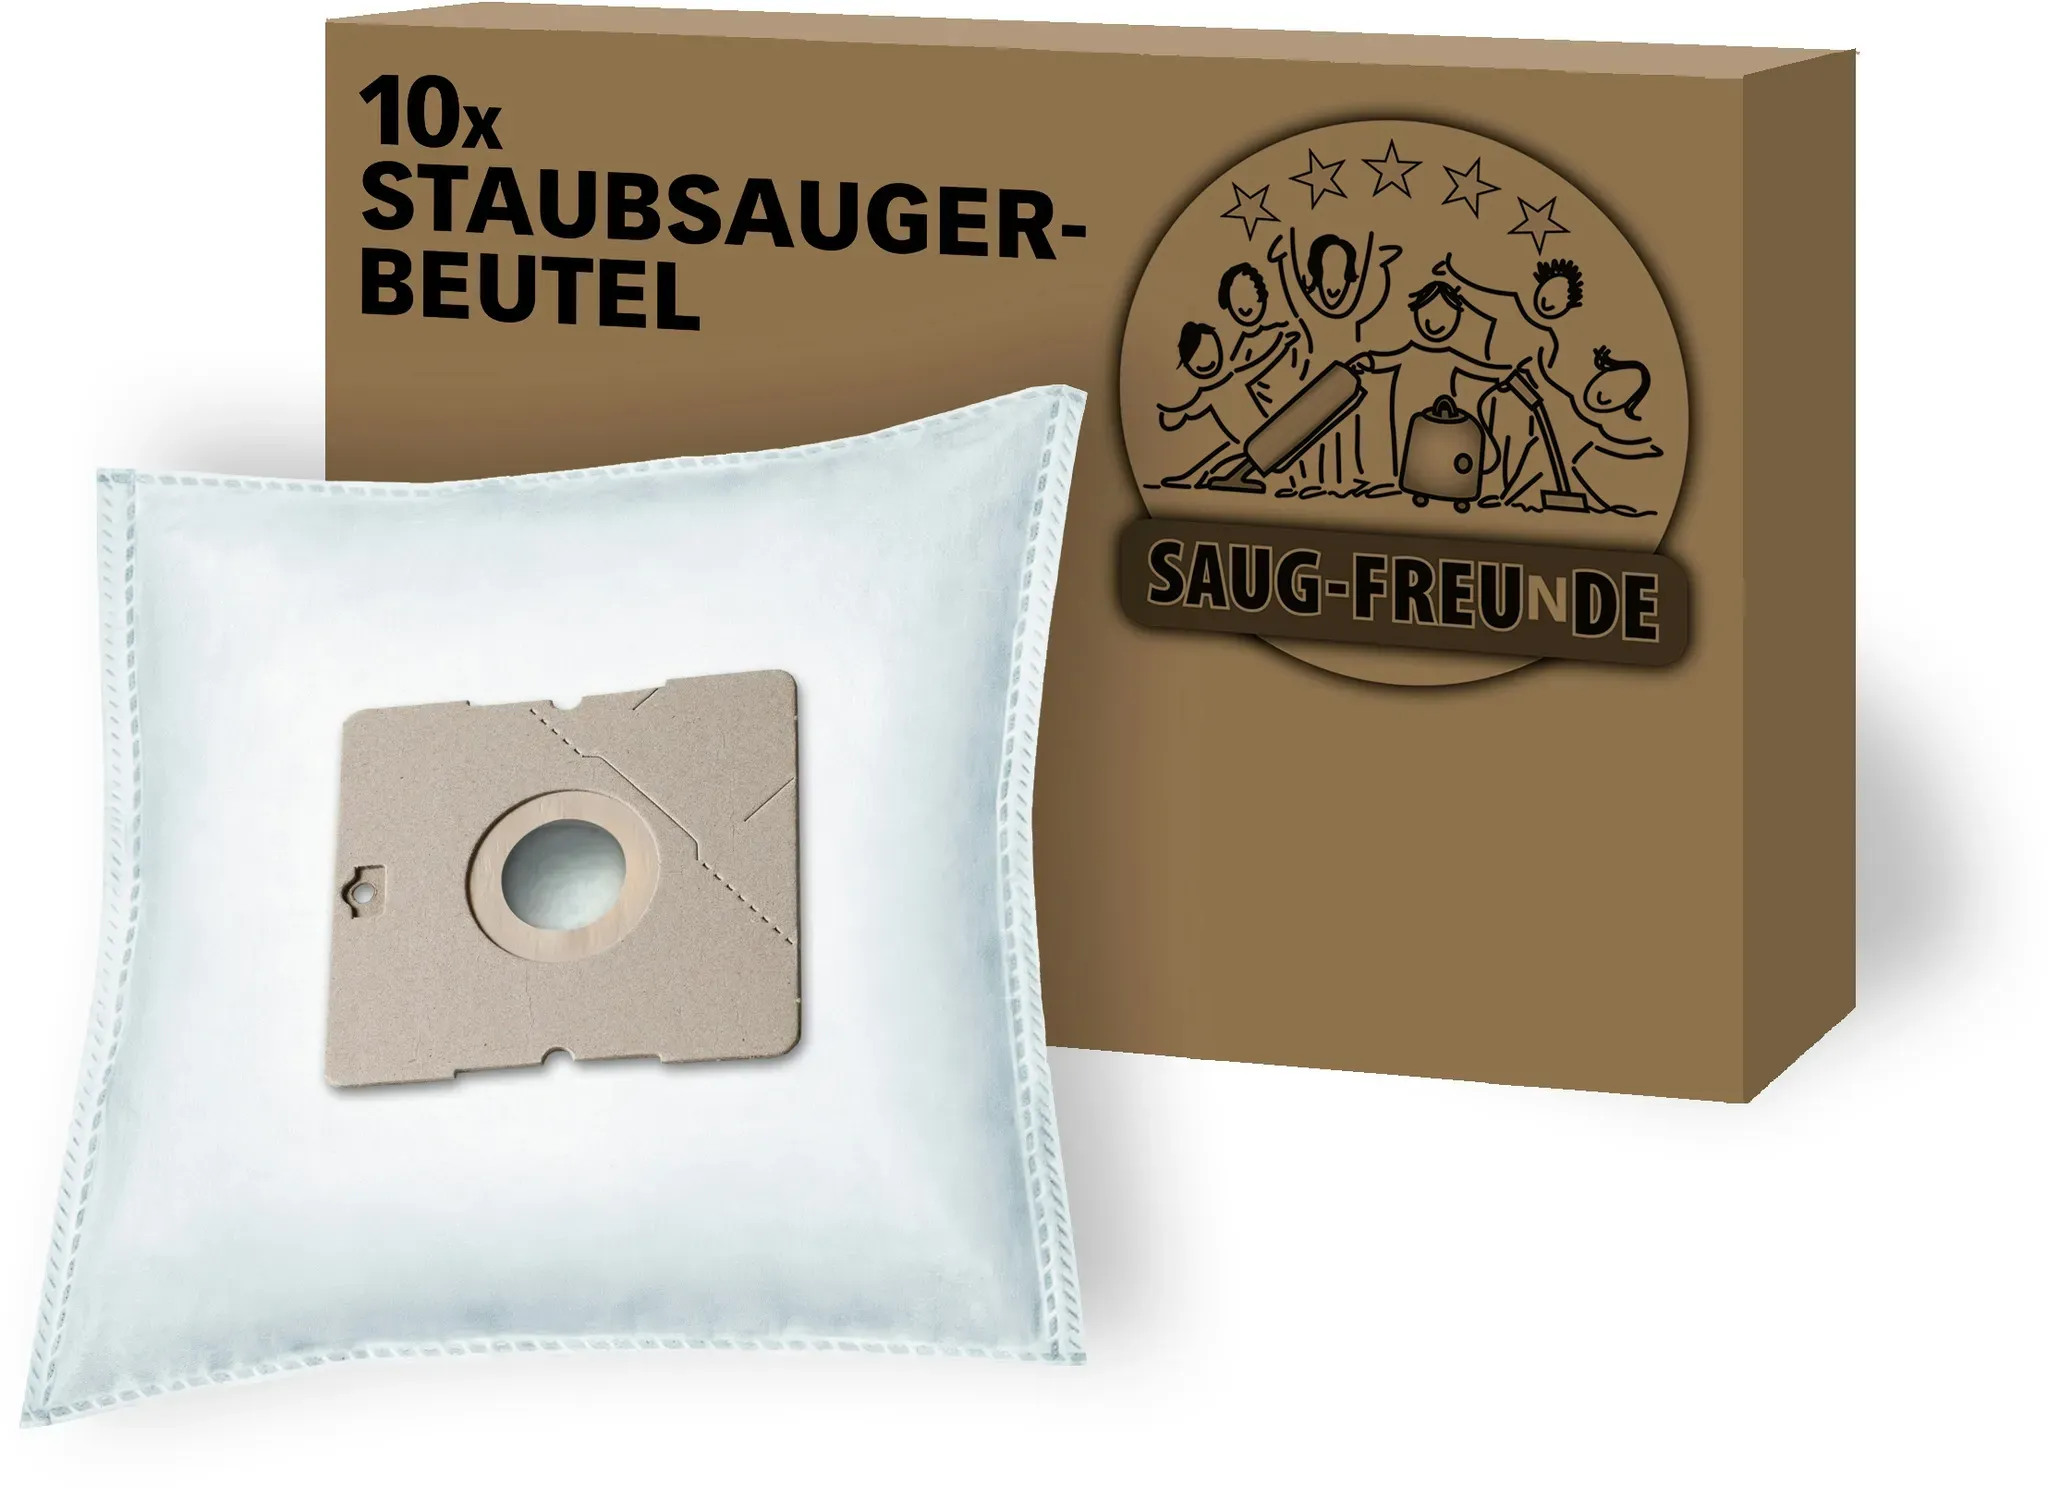 SAUG-FREUnDE | 10 Staubsaugerbeutel kompatibel zu LIDL Aquapur, W5, DIV 1010 (SF-DA6)